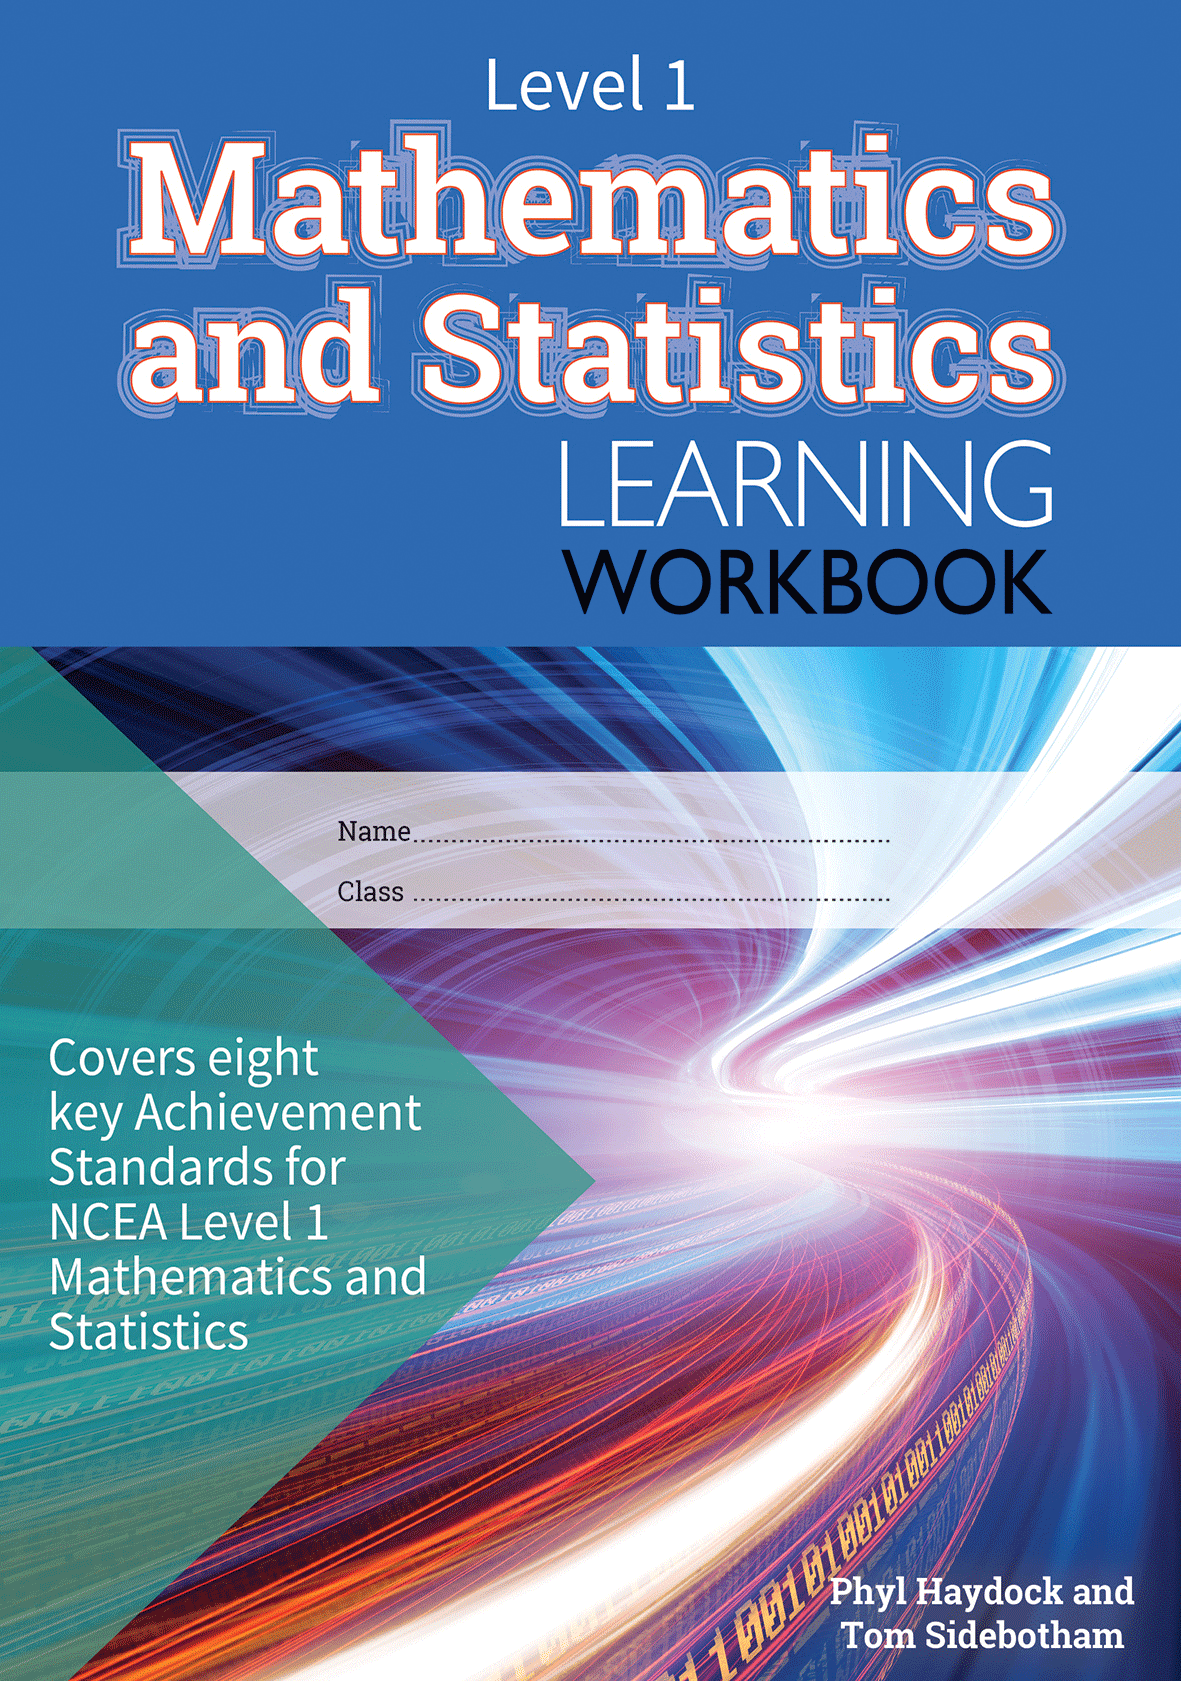 Level 1 Mathematics and Statistics Learning Workbook